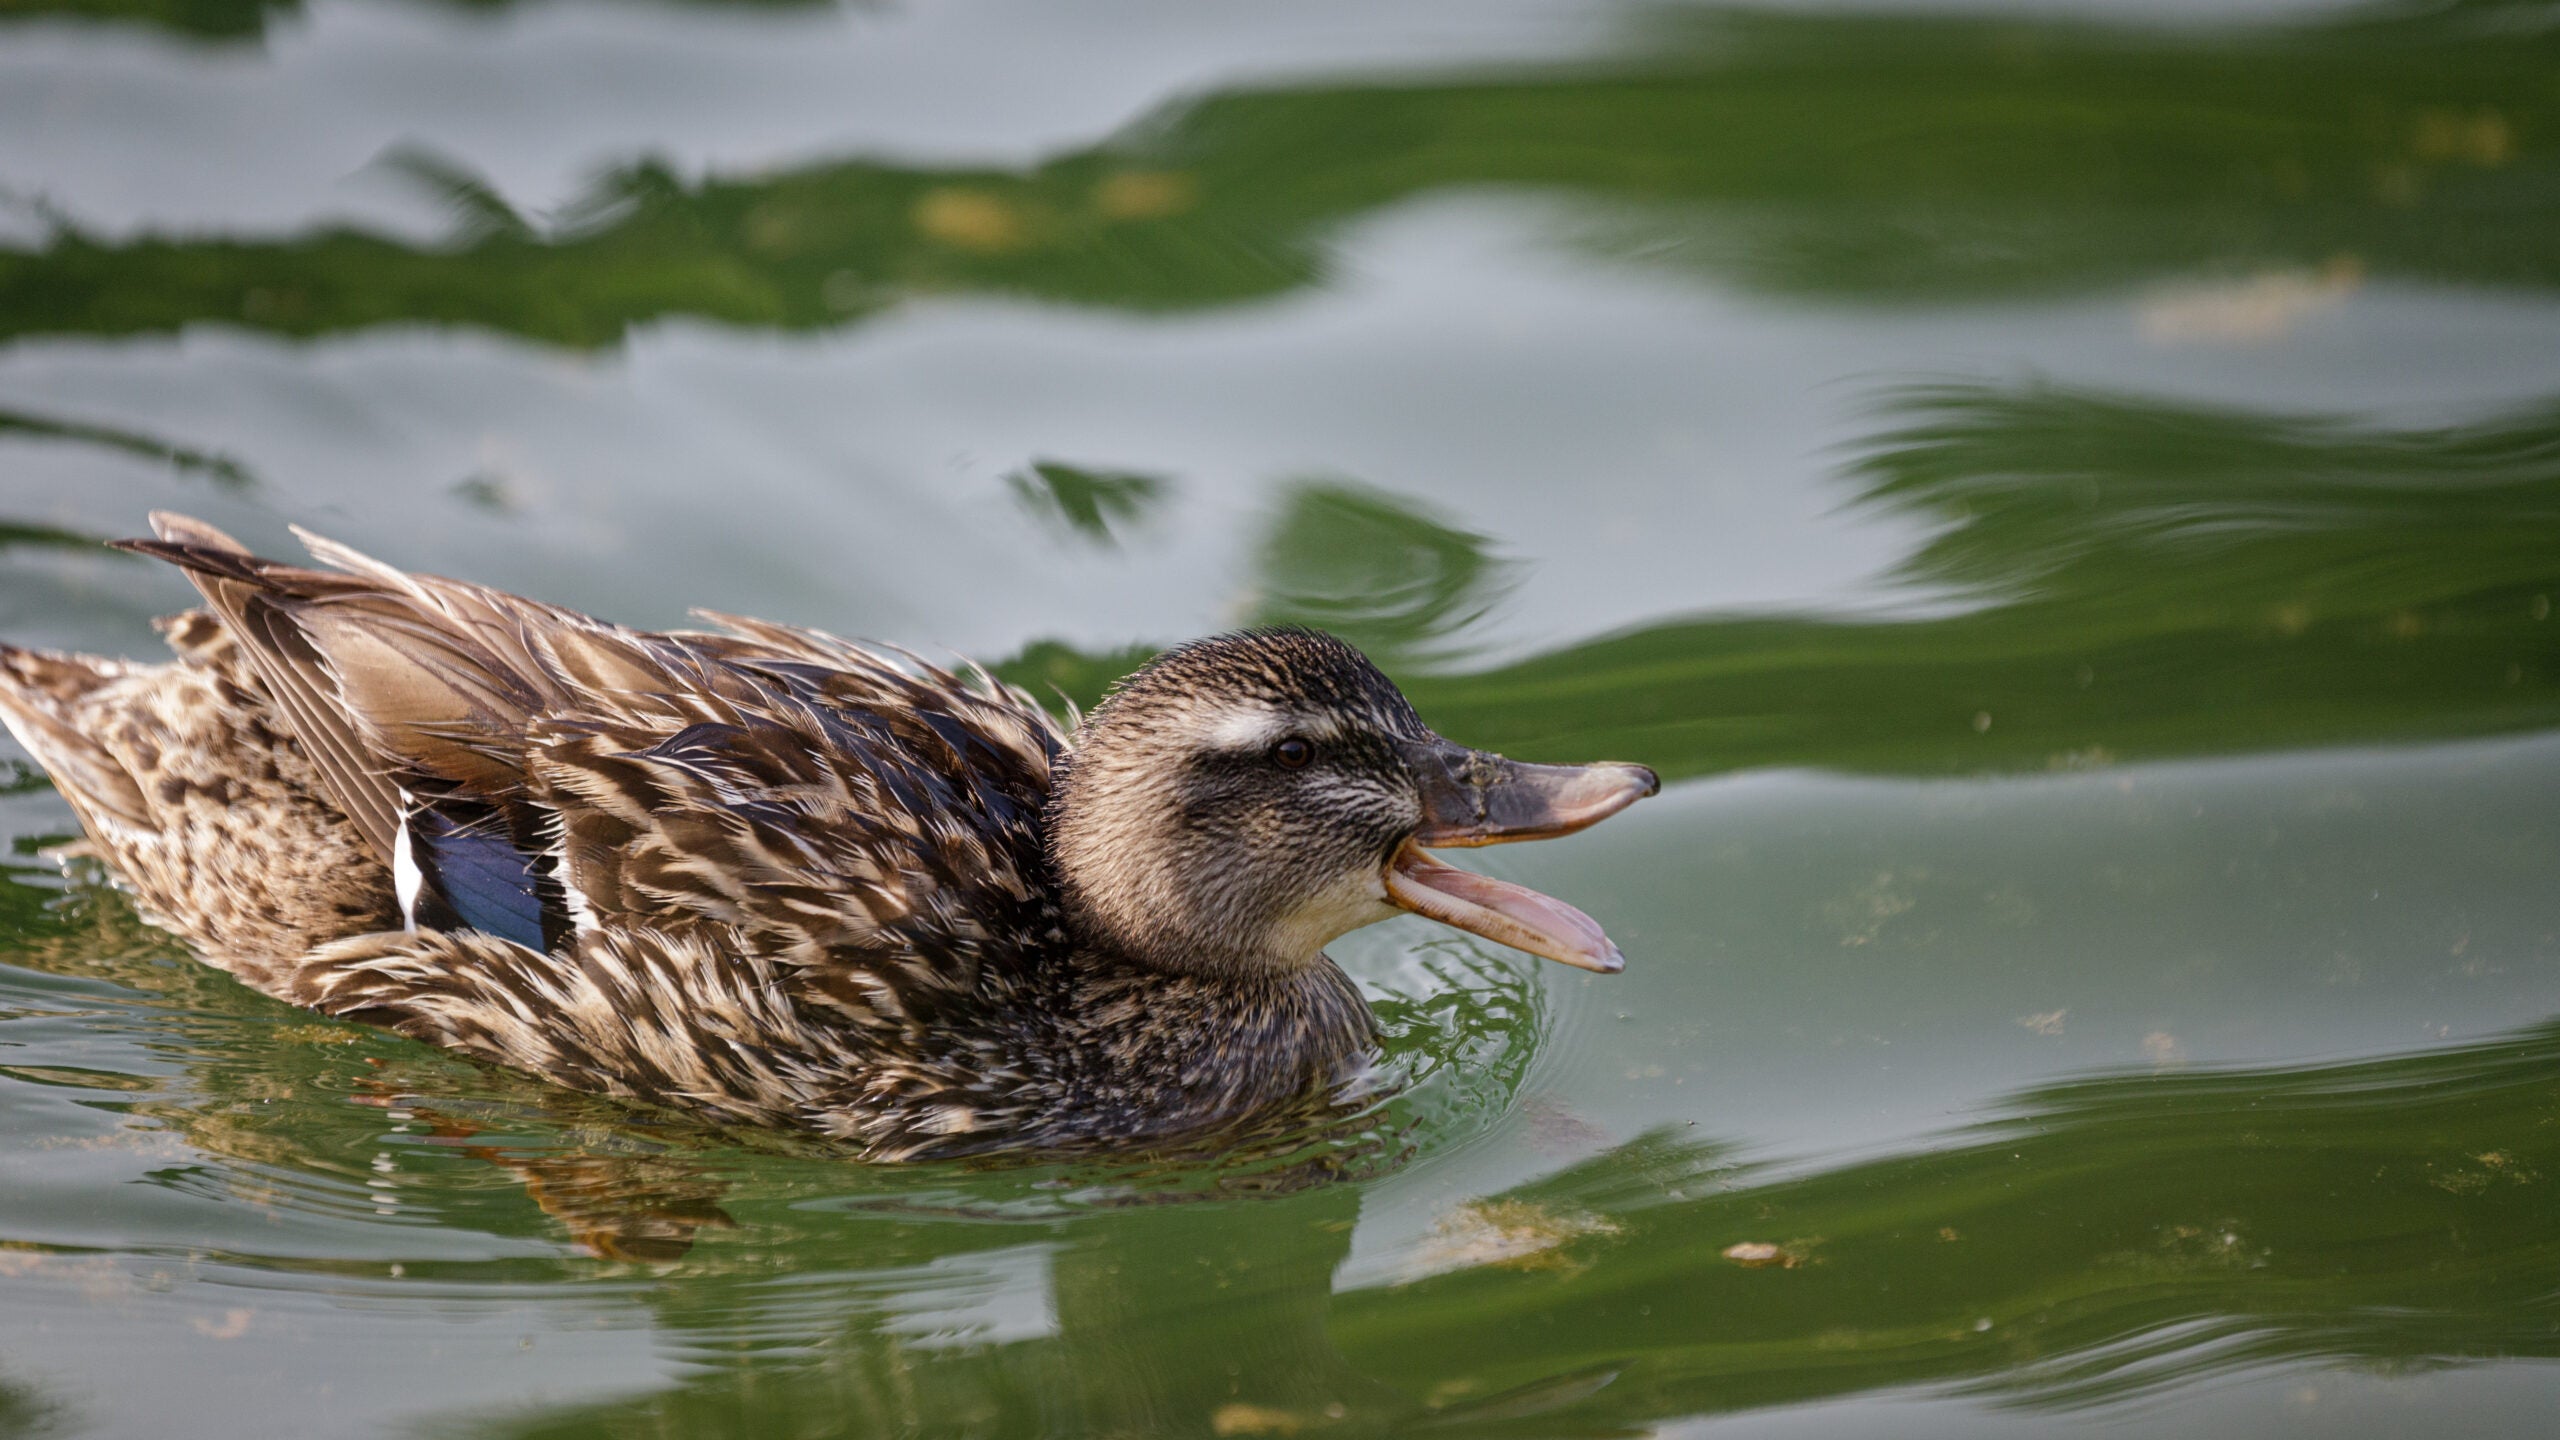 A hen mallard duck quacks as she swims along the surface of the water.